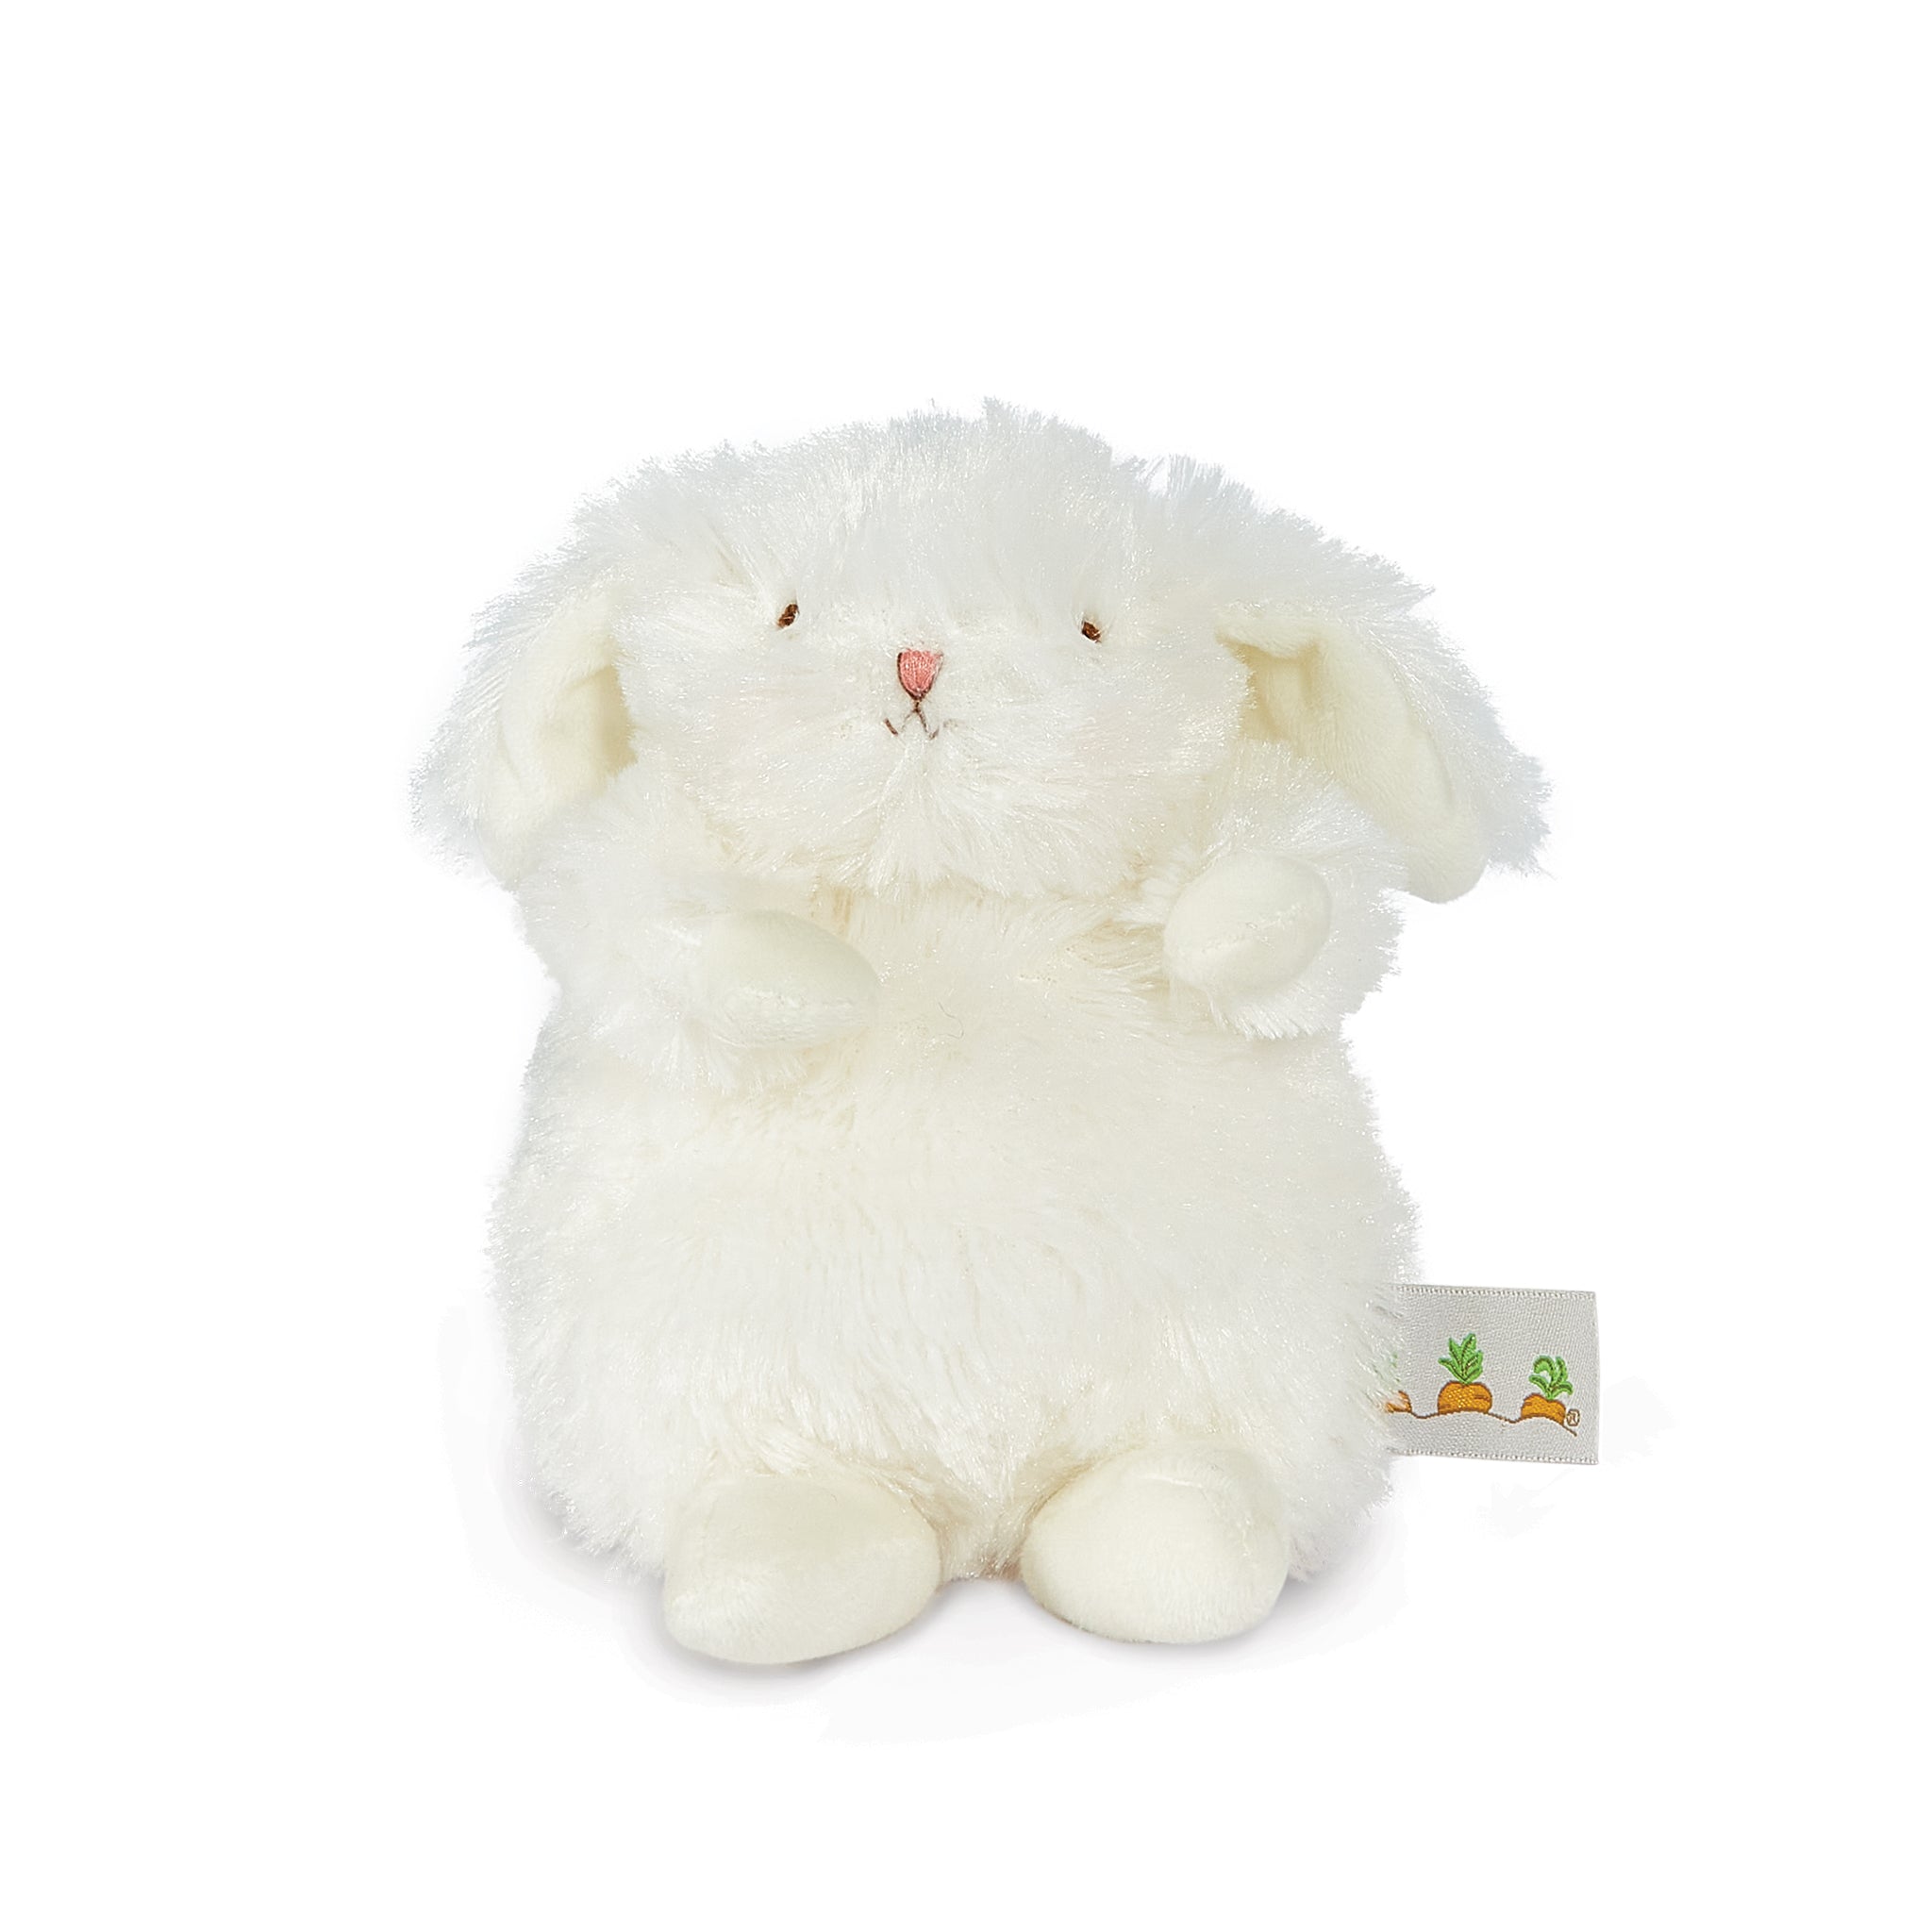 Wee Ittybit Bunny-Stuffed Animal-SKU: 824110 - Bunnies By The Bay